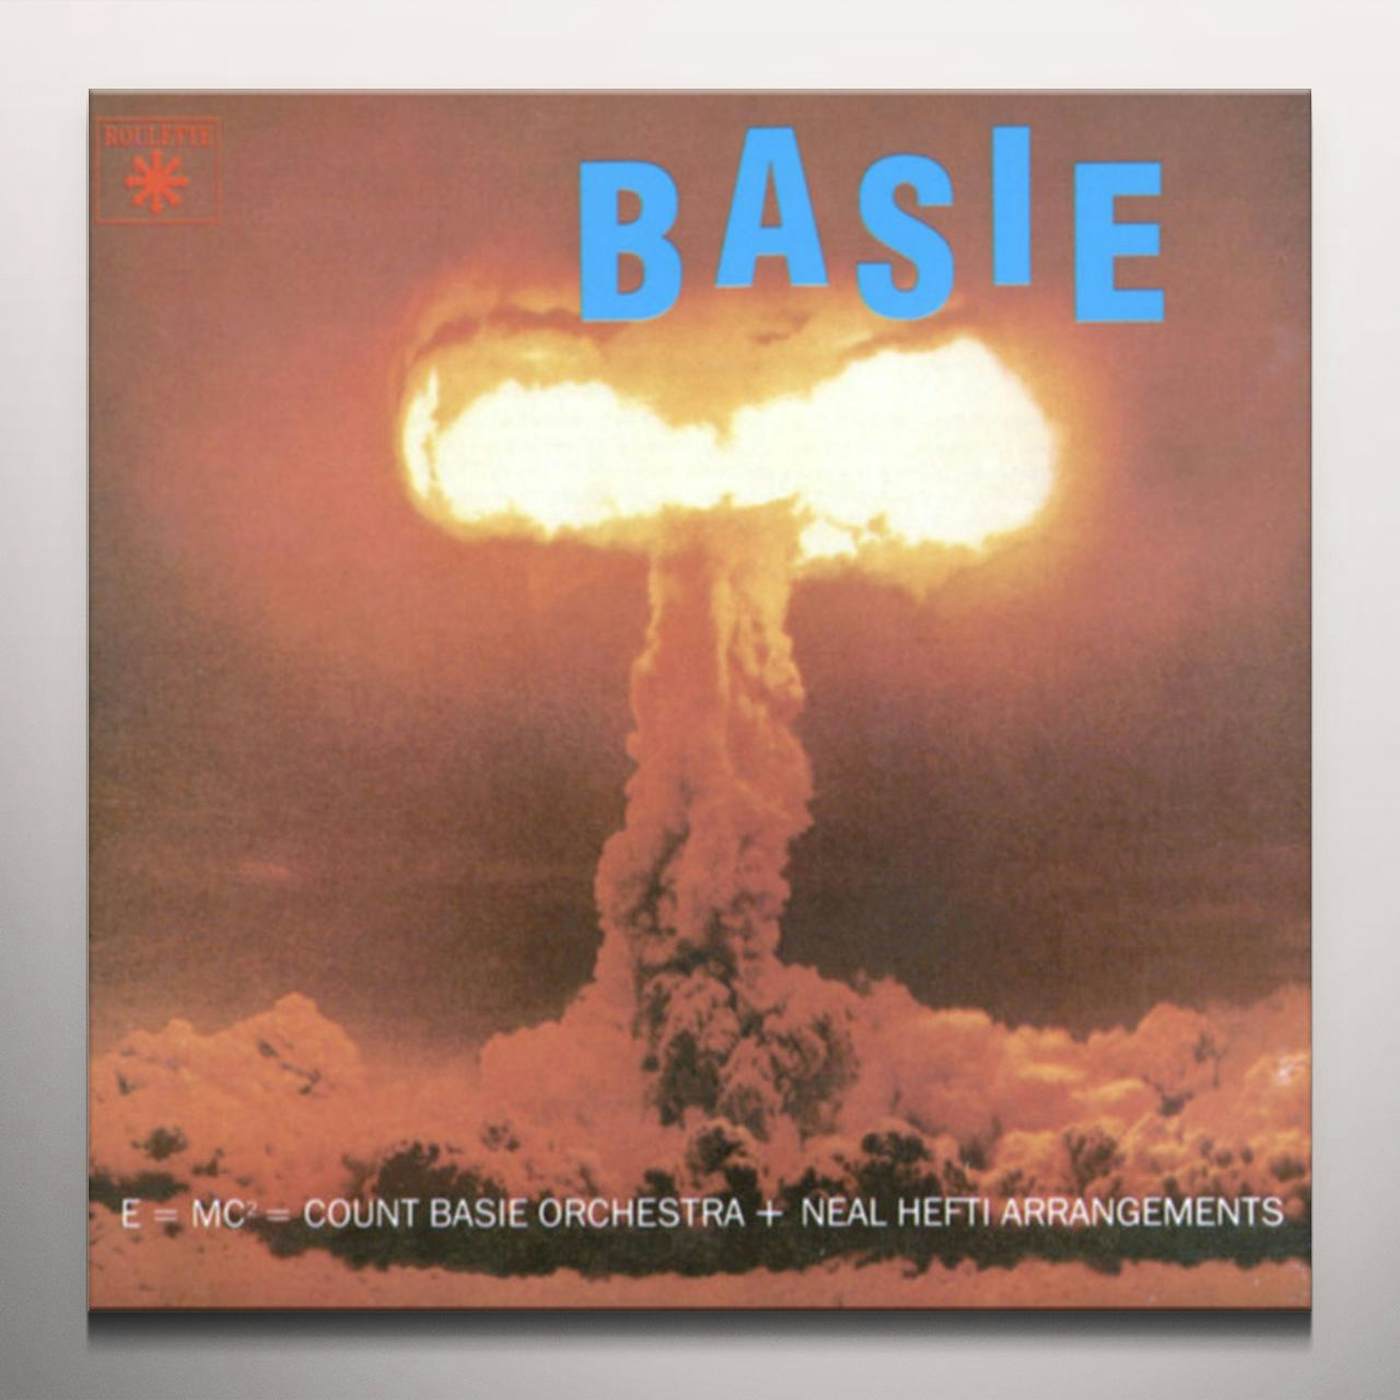 Count Basie ATOMIC MR. BASIE (4 BONUS TRACKS/180G/LIMITED EDITION/SOLID ORANGE VIRGIN VINYL) Vinyl Record